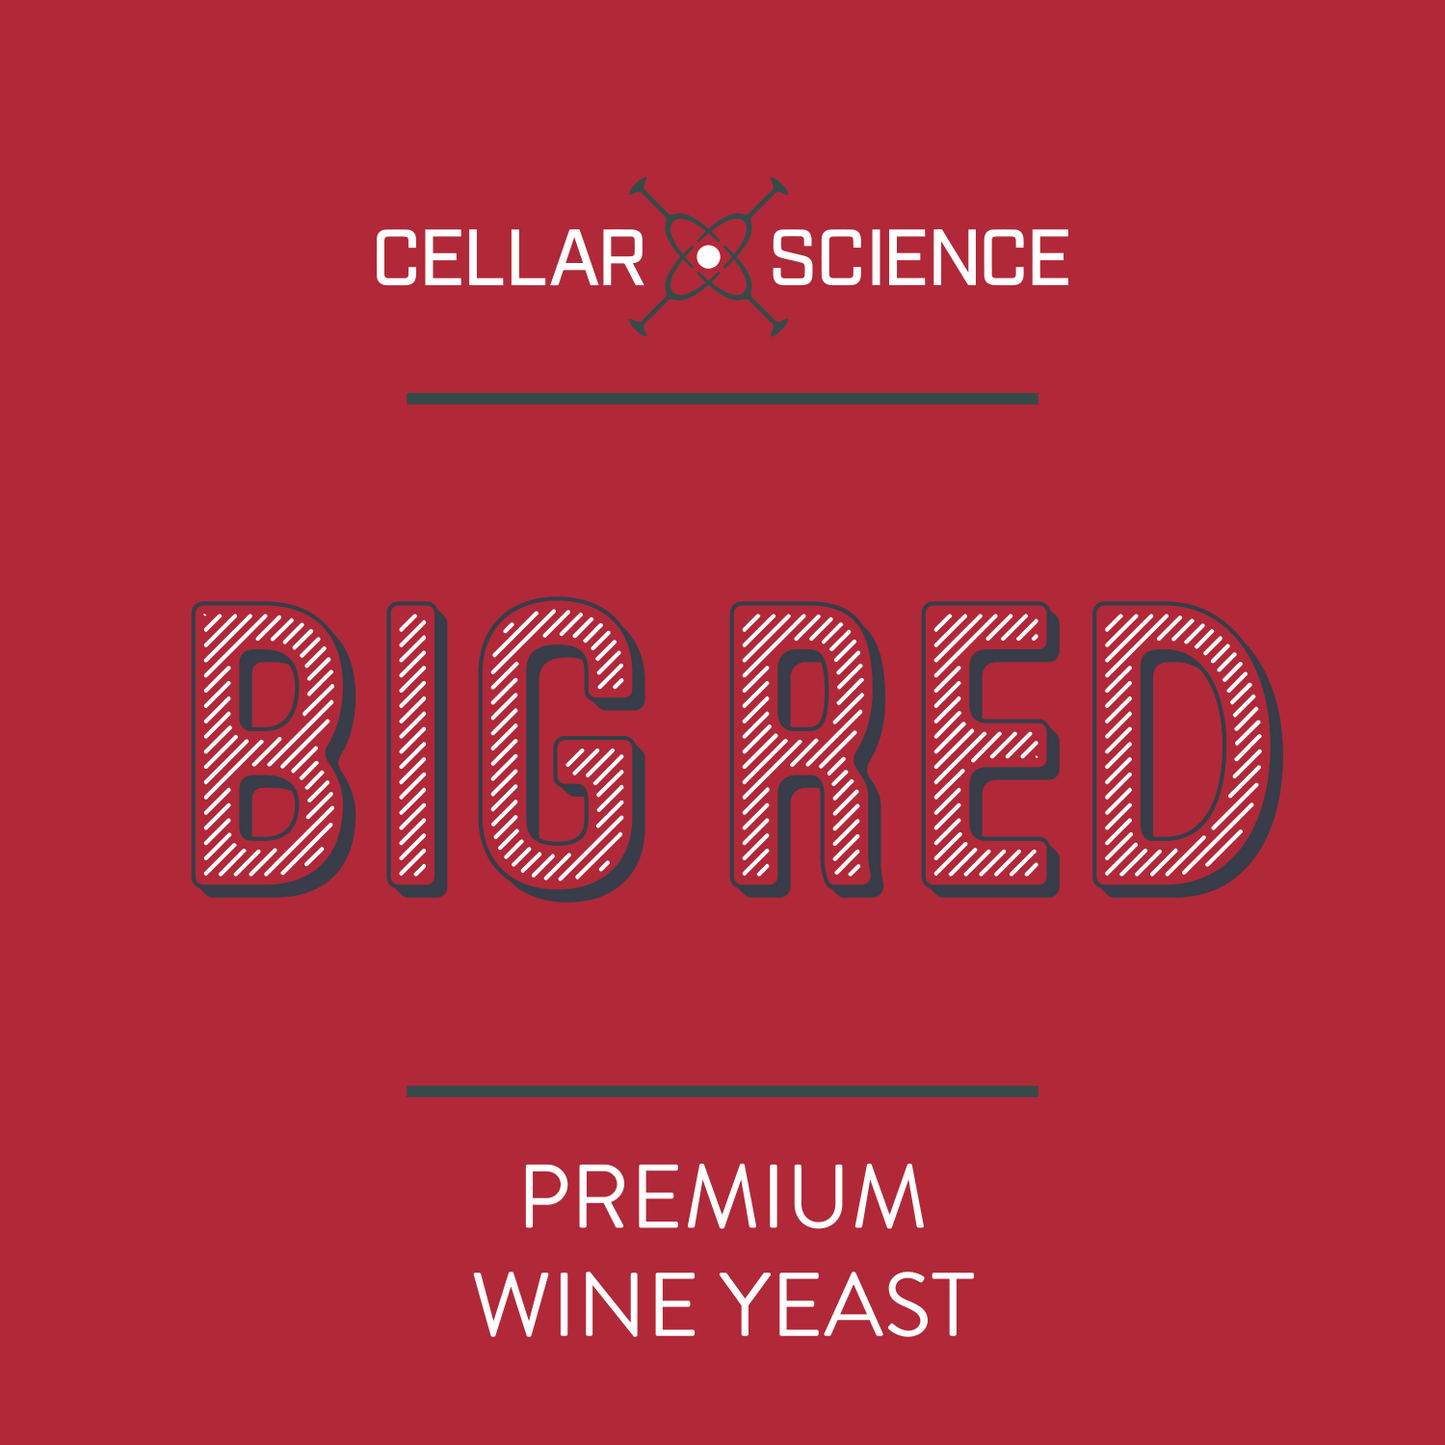 BIG RED Dry Wine Yeast